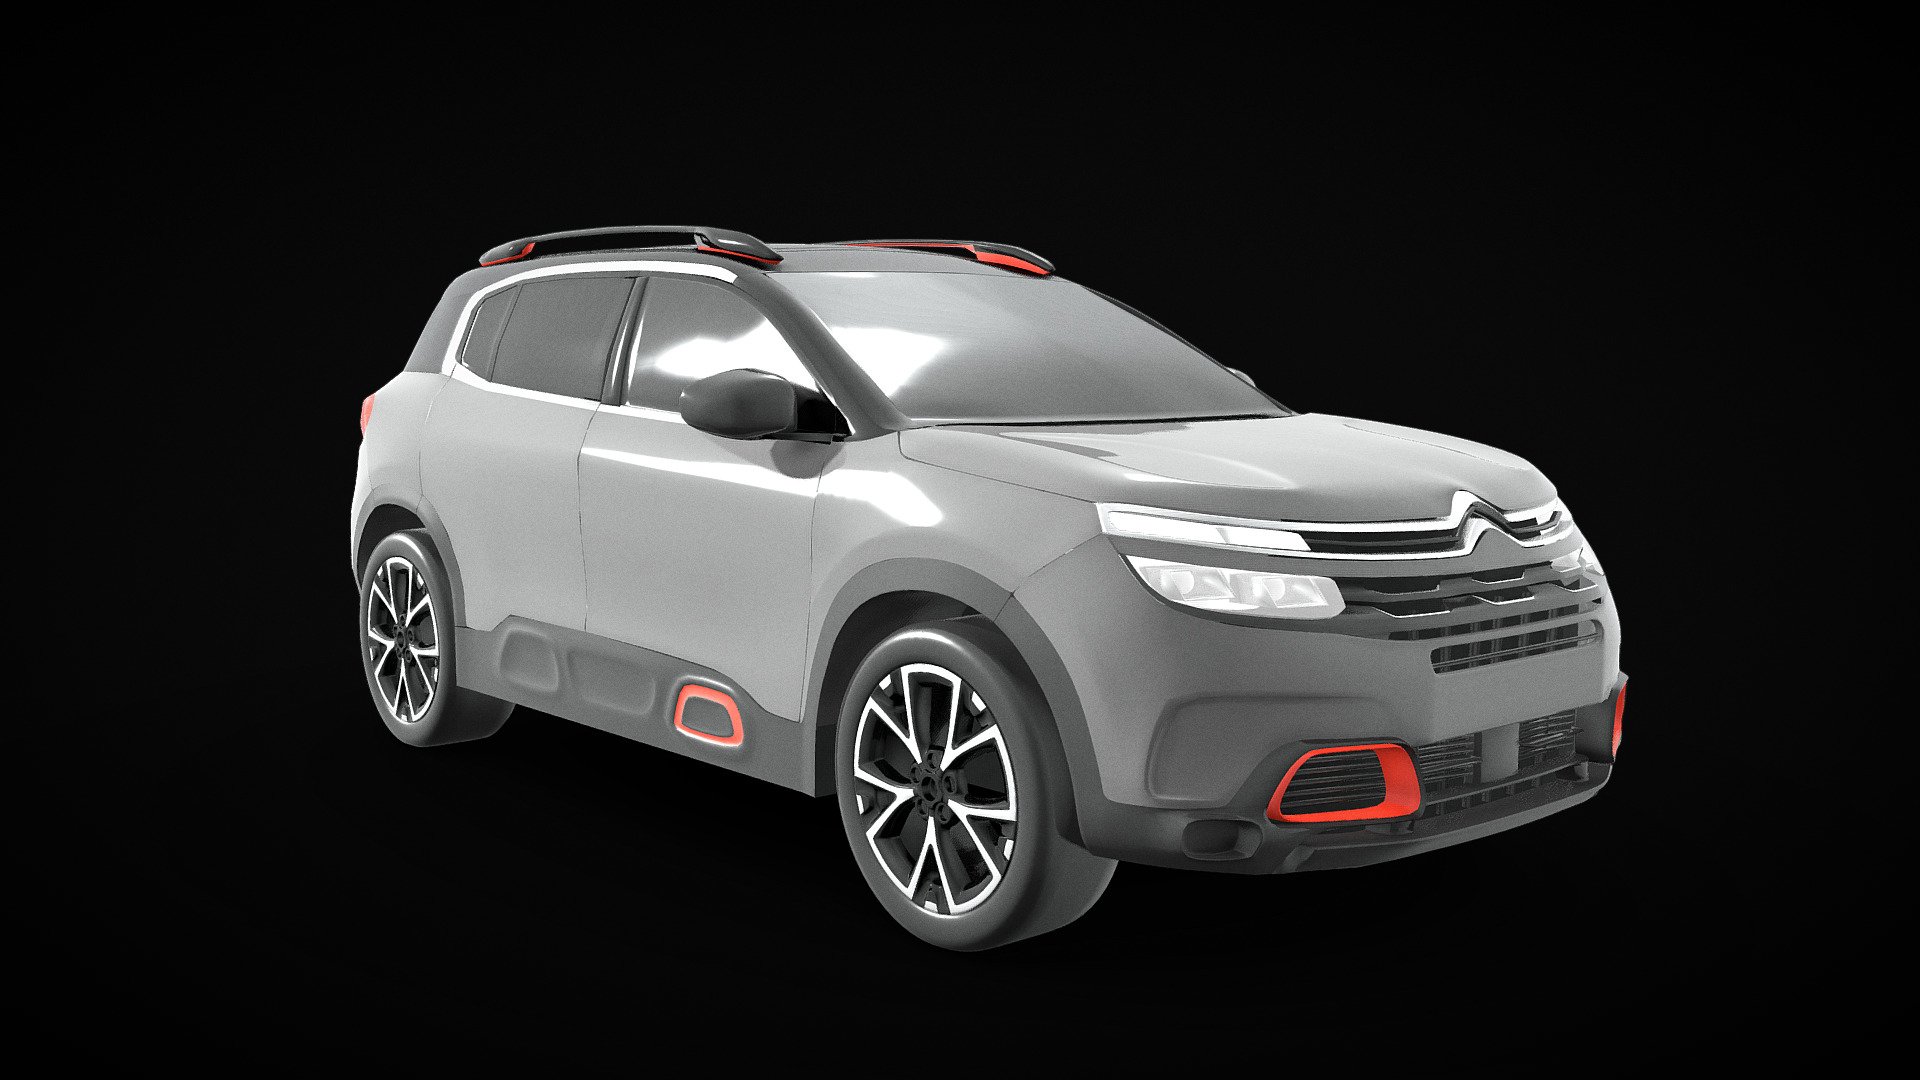 Citroën i made years ago - Citroen C5 Aircross Citroën - Buy Royalty Free 3D model by remtromol 3d model